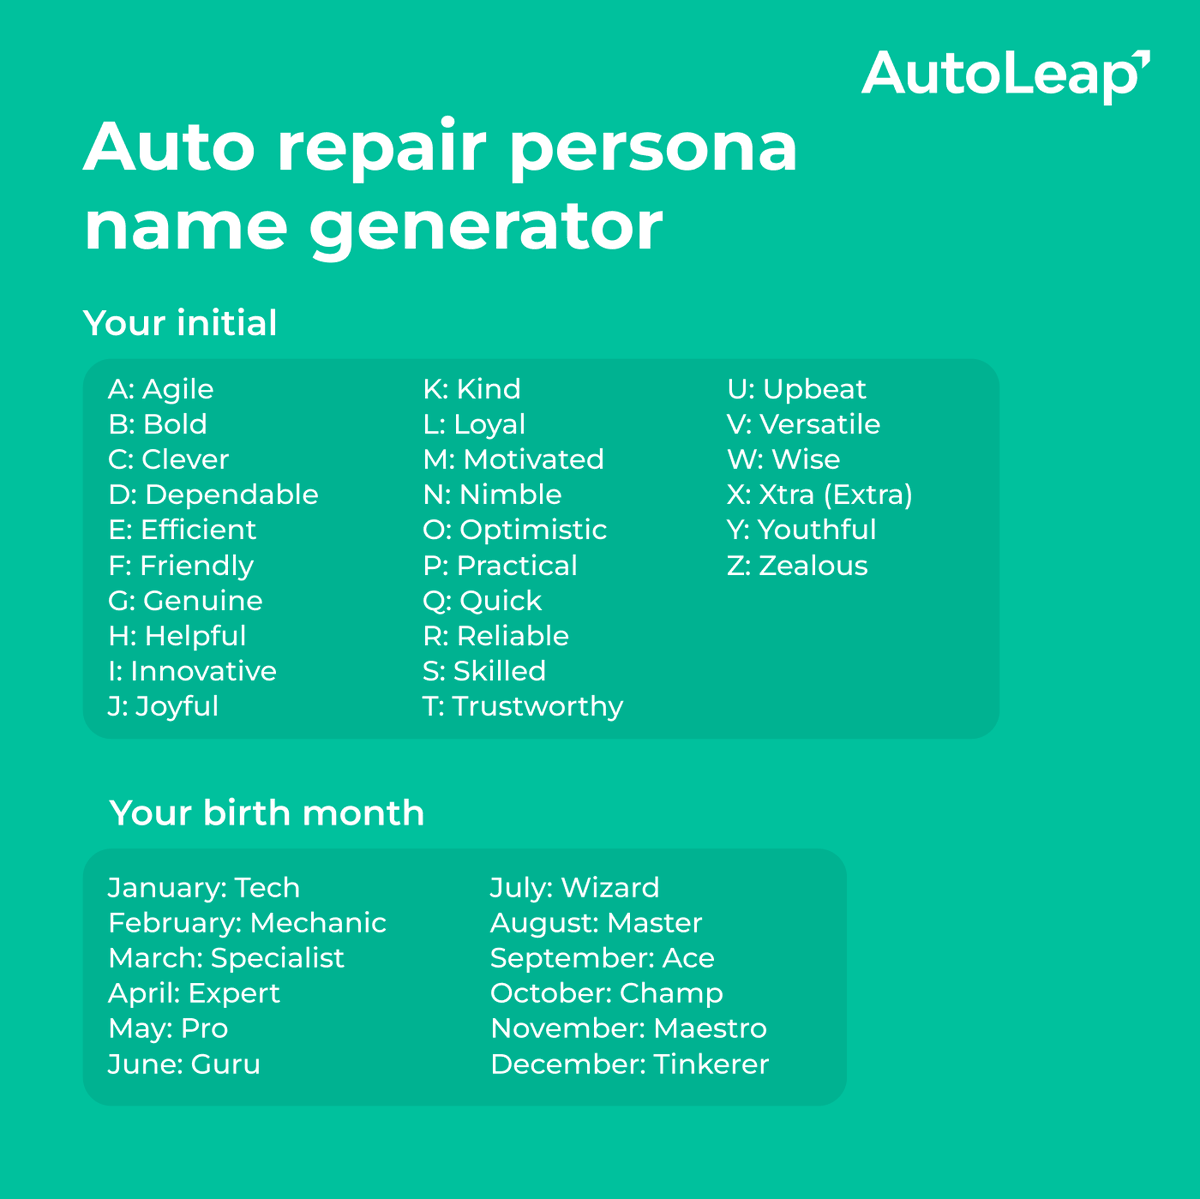 Drop your auto repair persona names below! Let's see who's got the most unique and creative combo 🤔 #autorepair #meme #namegenerator #shopmanagement #automotive #car